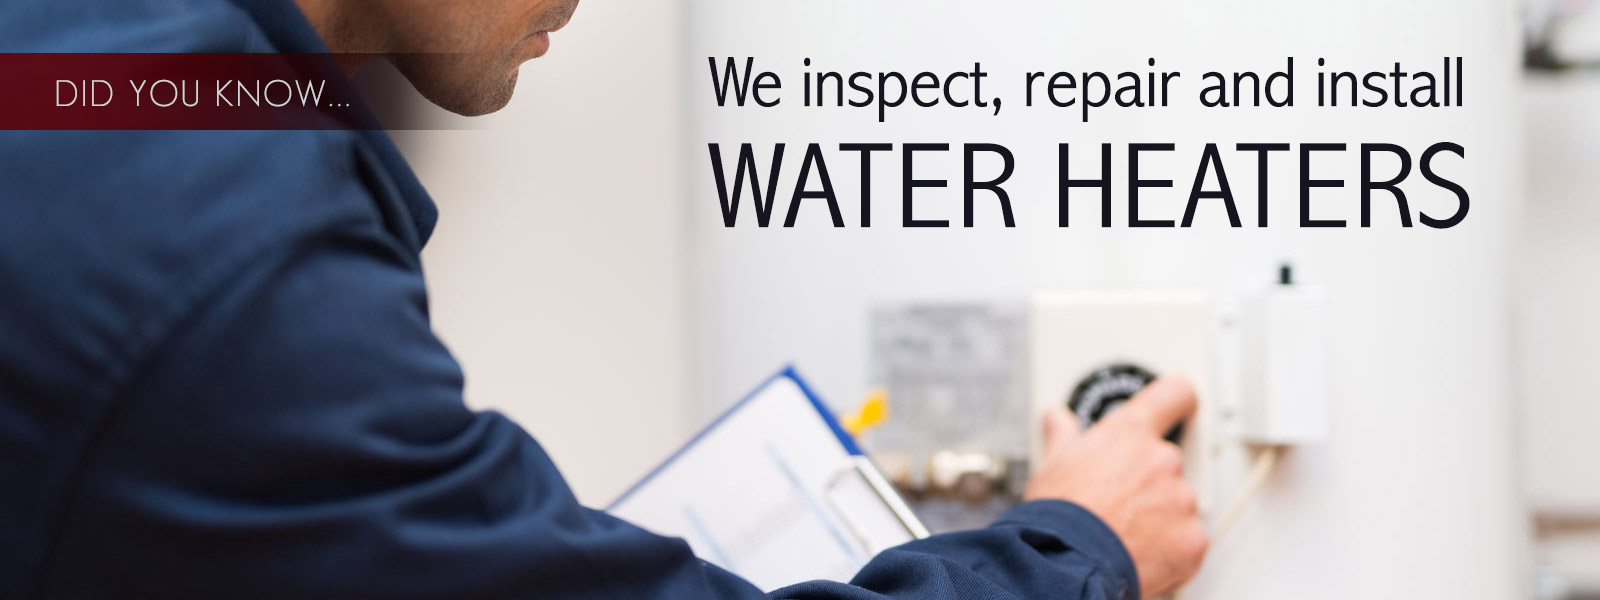 water heater installation repair inspection